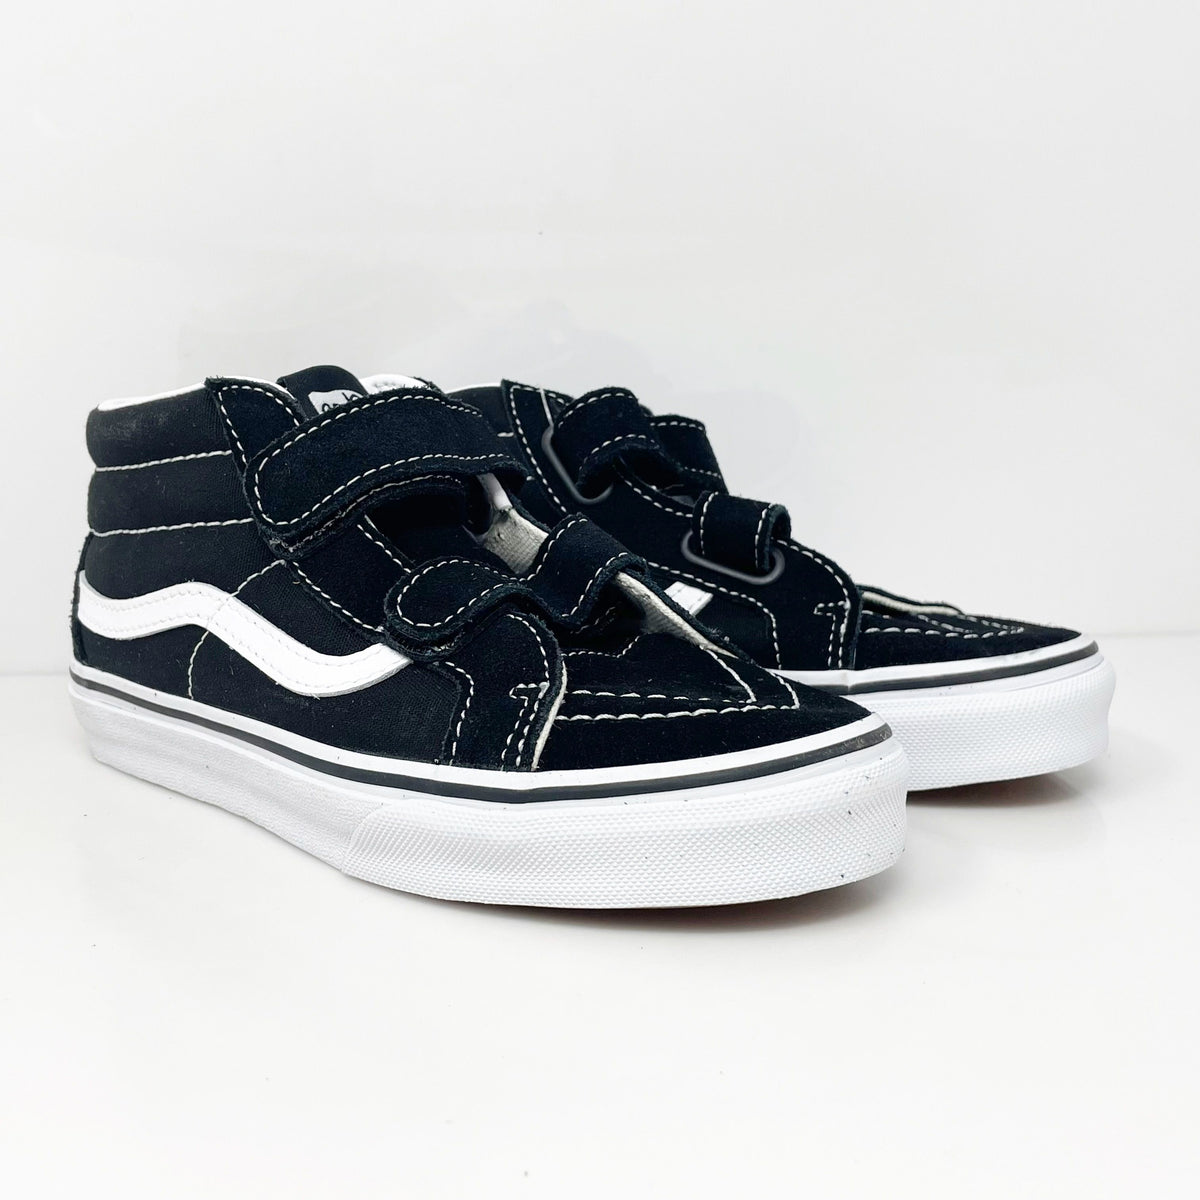 Vans Boys Sk8 Hi Reissue V 507698 Black Casual Shoes Sneakers Size 2.5 ...